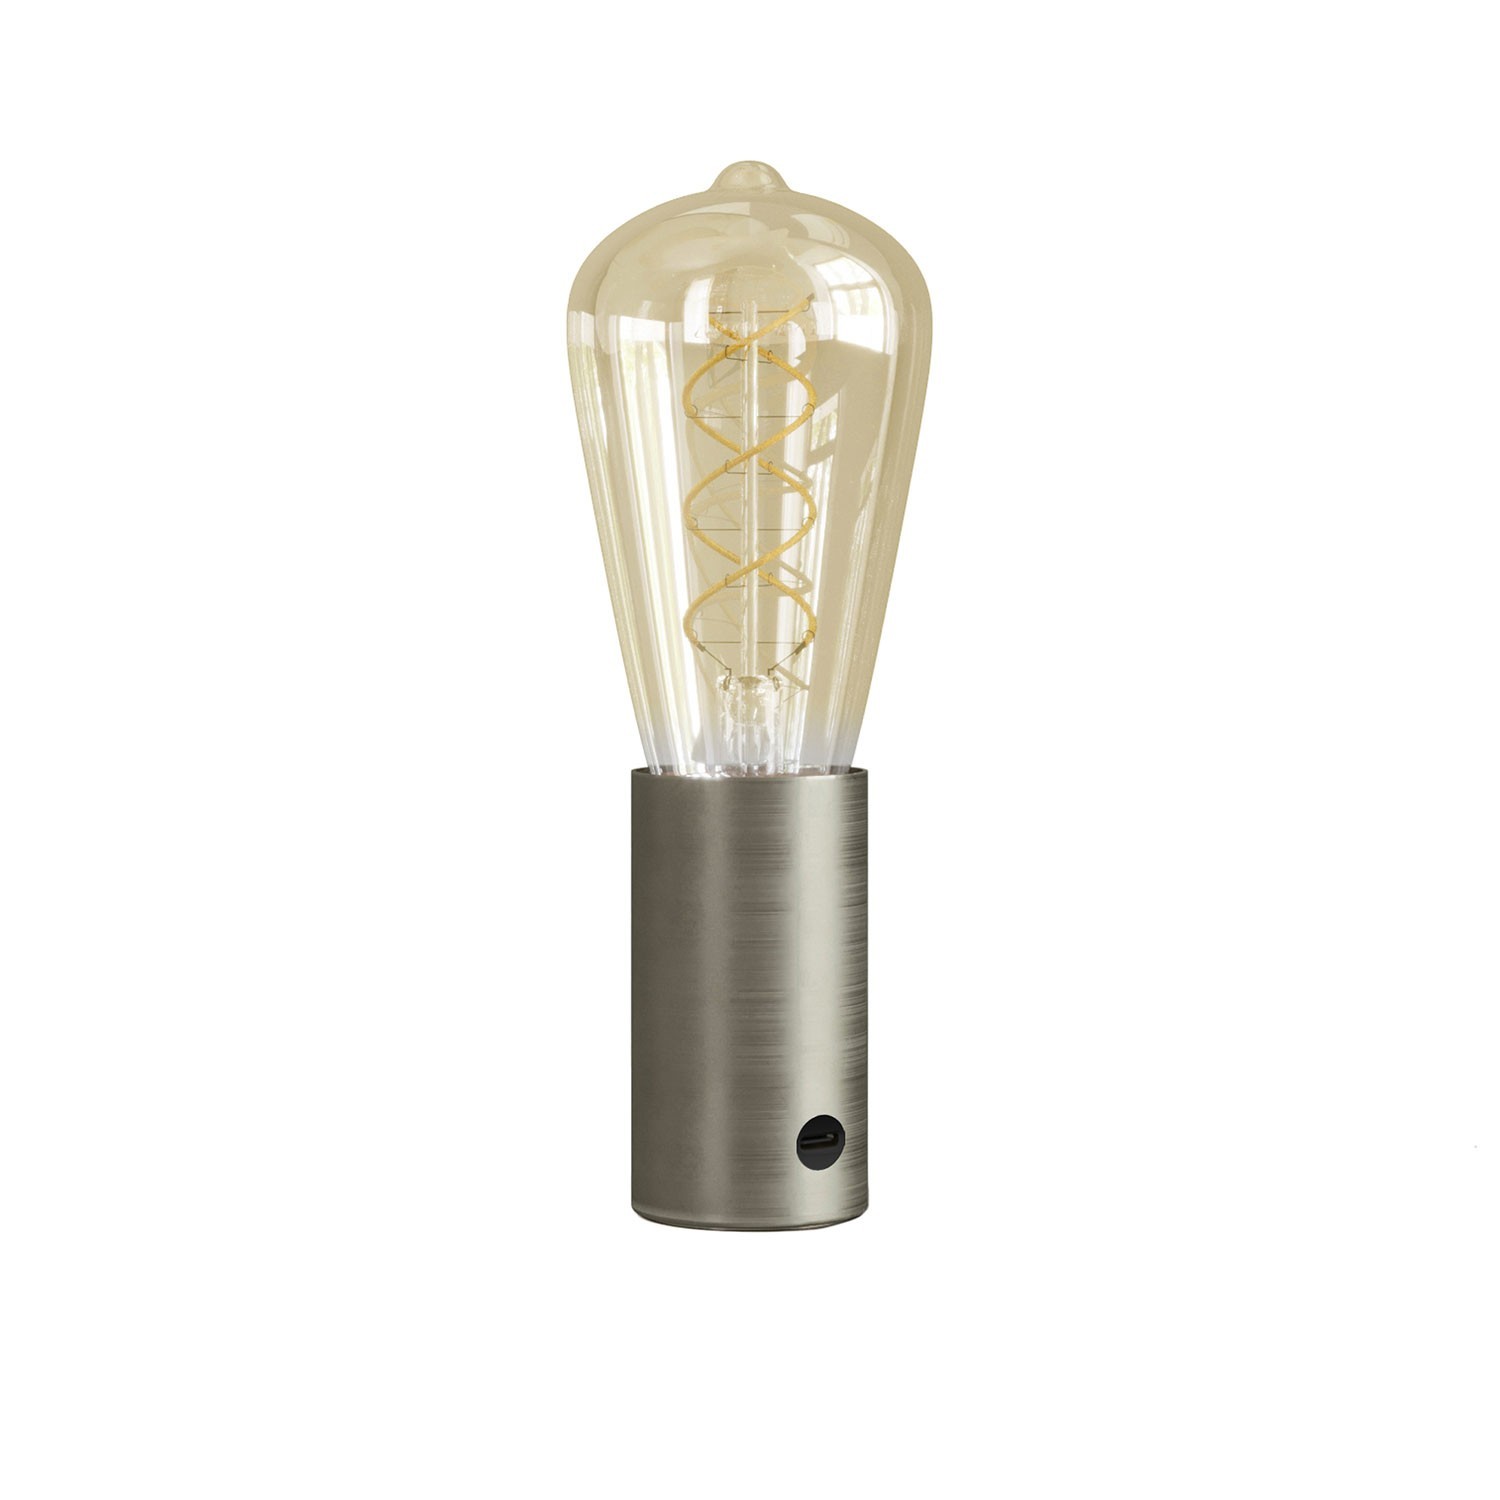 SI! 5V Portable lamp with ST64 light bulb